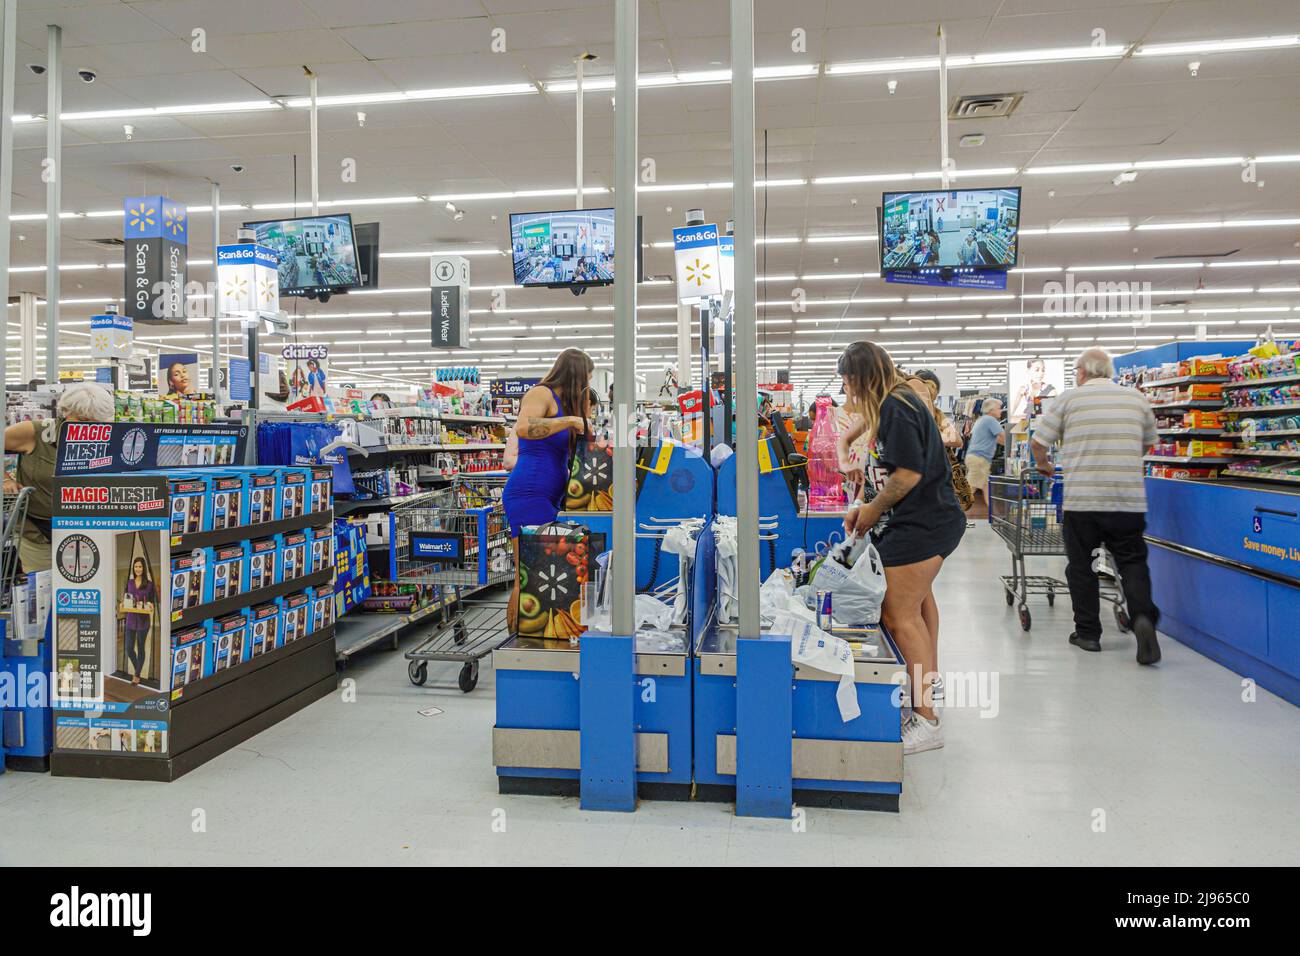 Miami Florida,Walmart discount department store inside interior shopping shoppers,checkout line queue Stock Photo